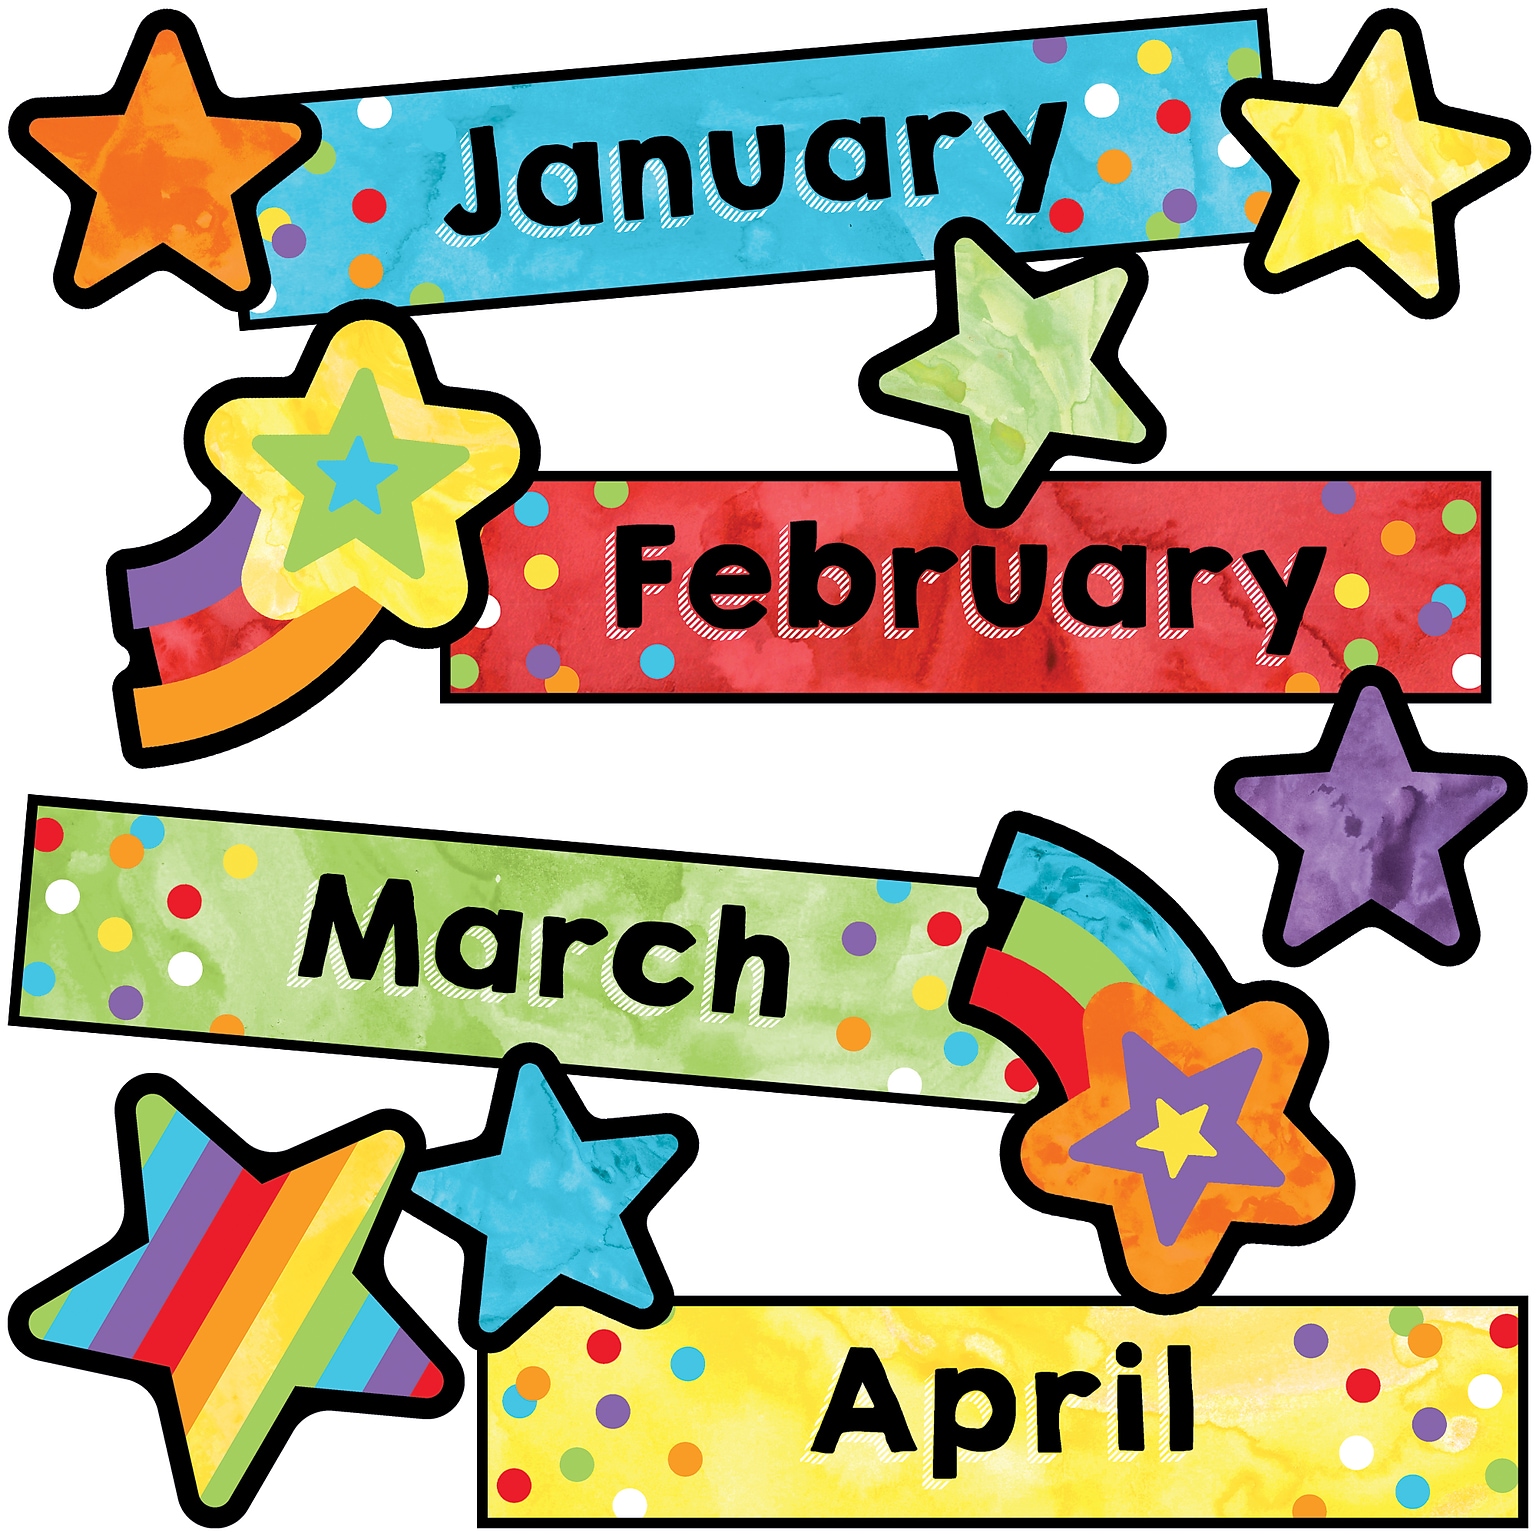 Carson-Dellosa Celebrate Learning Months of the Year Mini Bulletin Board Set (110452)